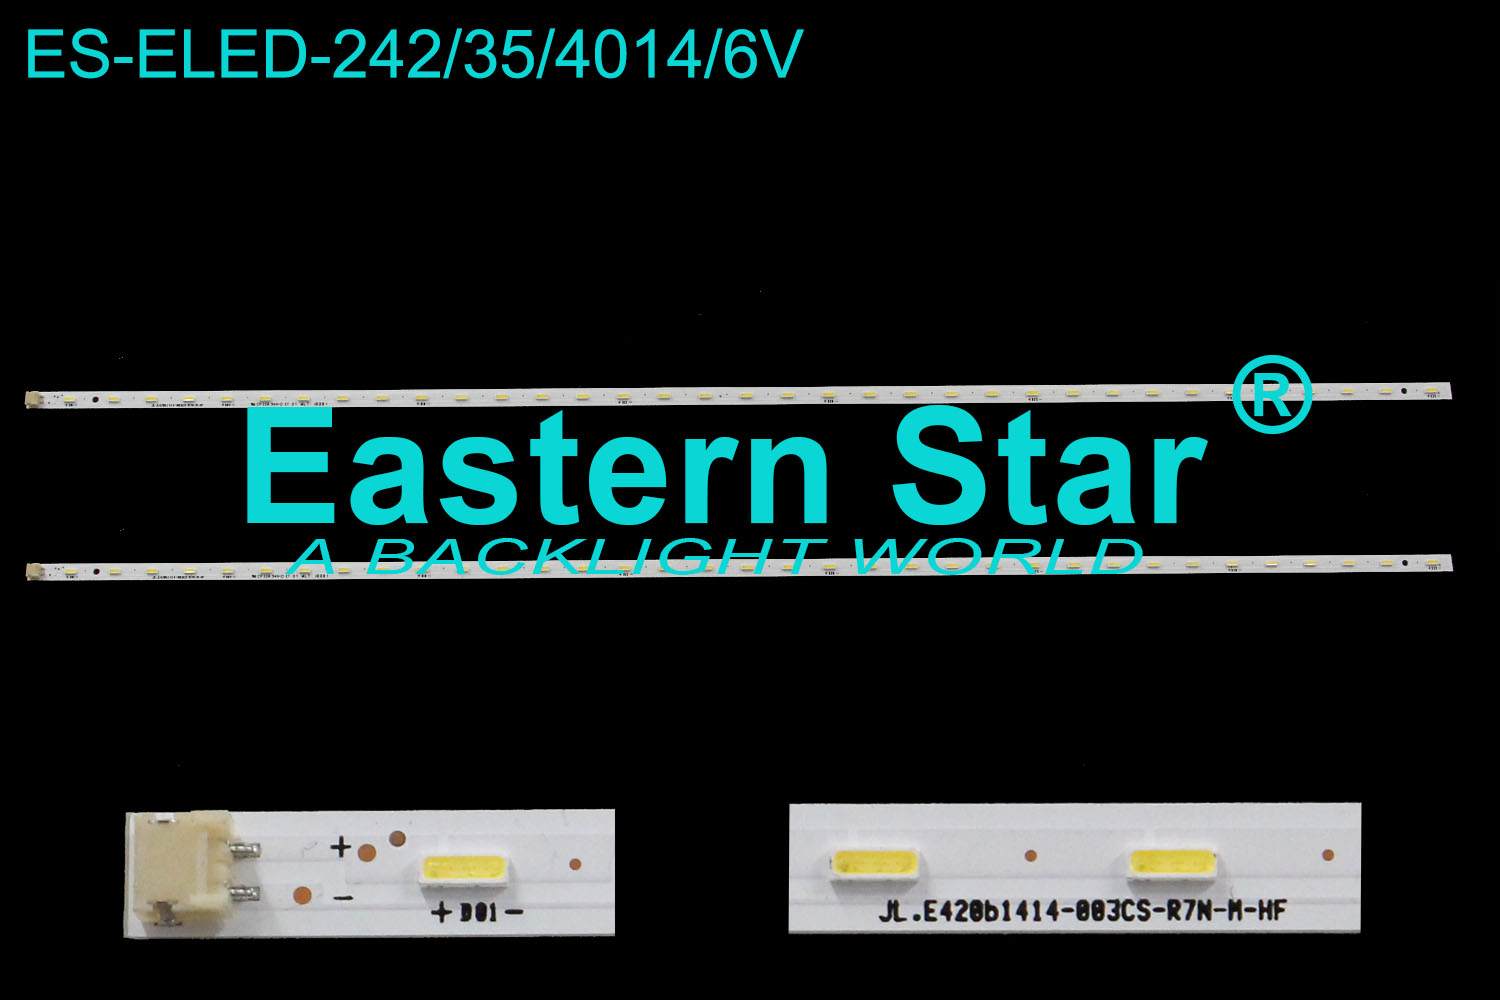 ES-ELED-242 ELED/EDGE TV backlight 42'' 35LEDs use for JL.E420b1414-003CS-R7N-M-HF LED STRIPS (/)